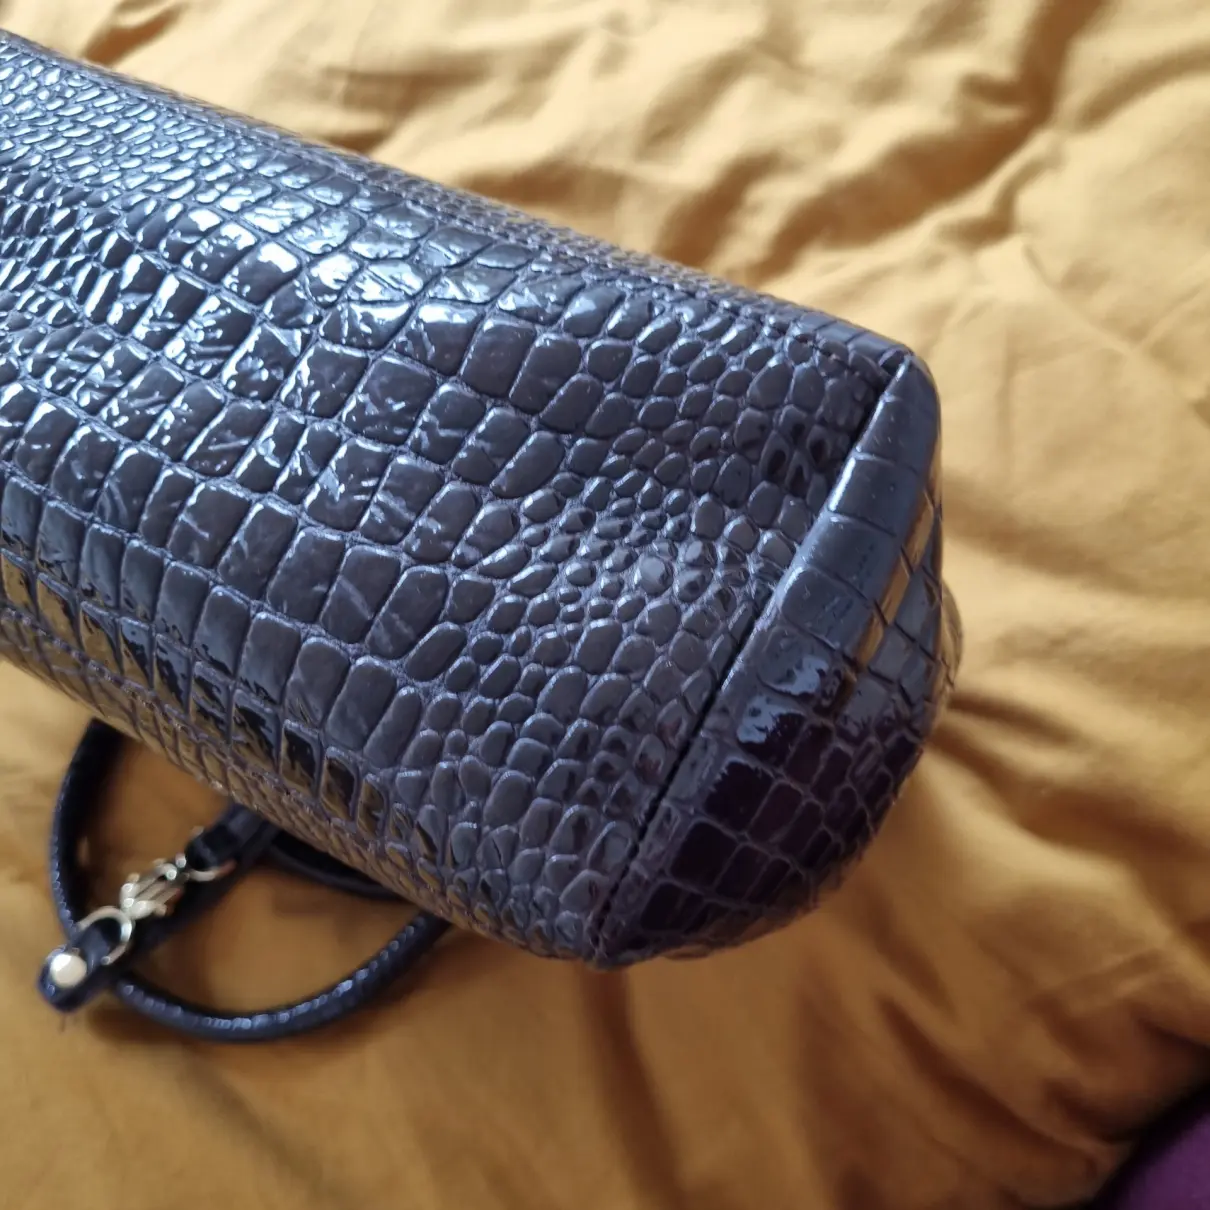 Patent leather handbag Harrods